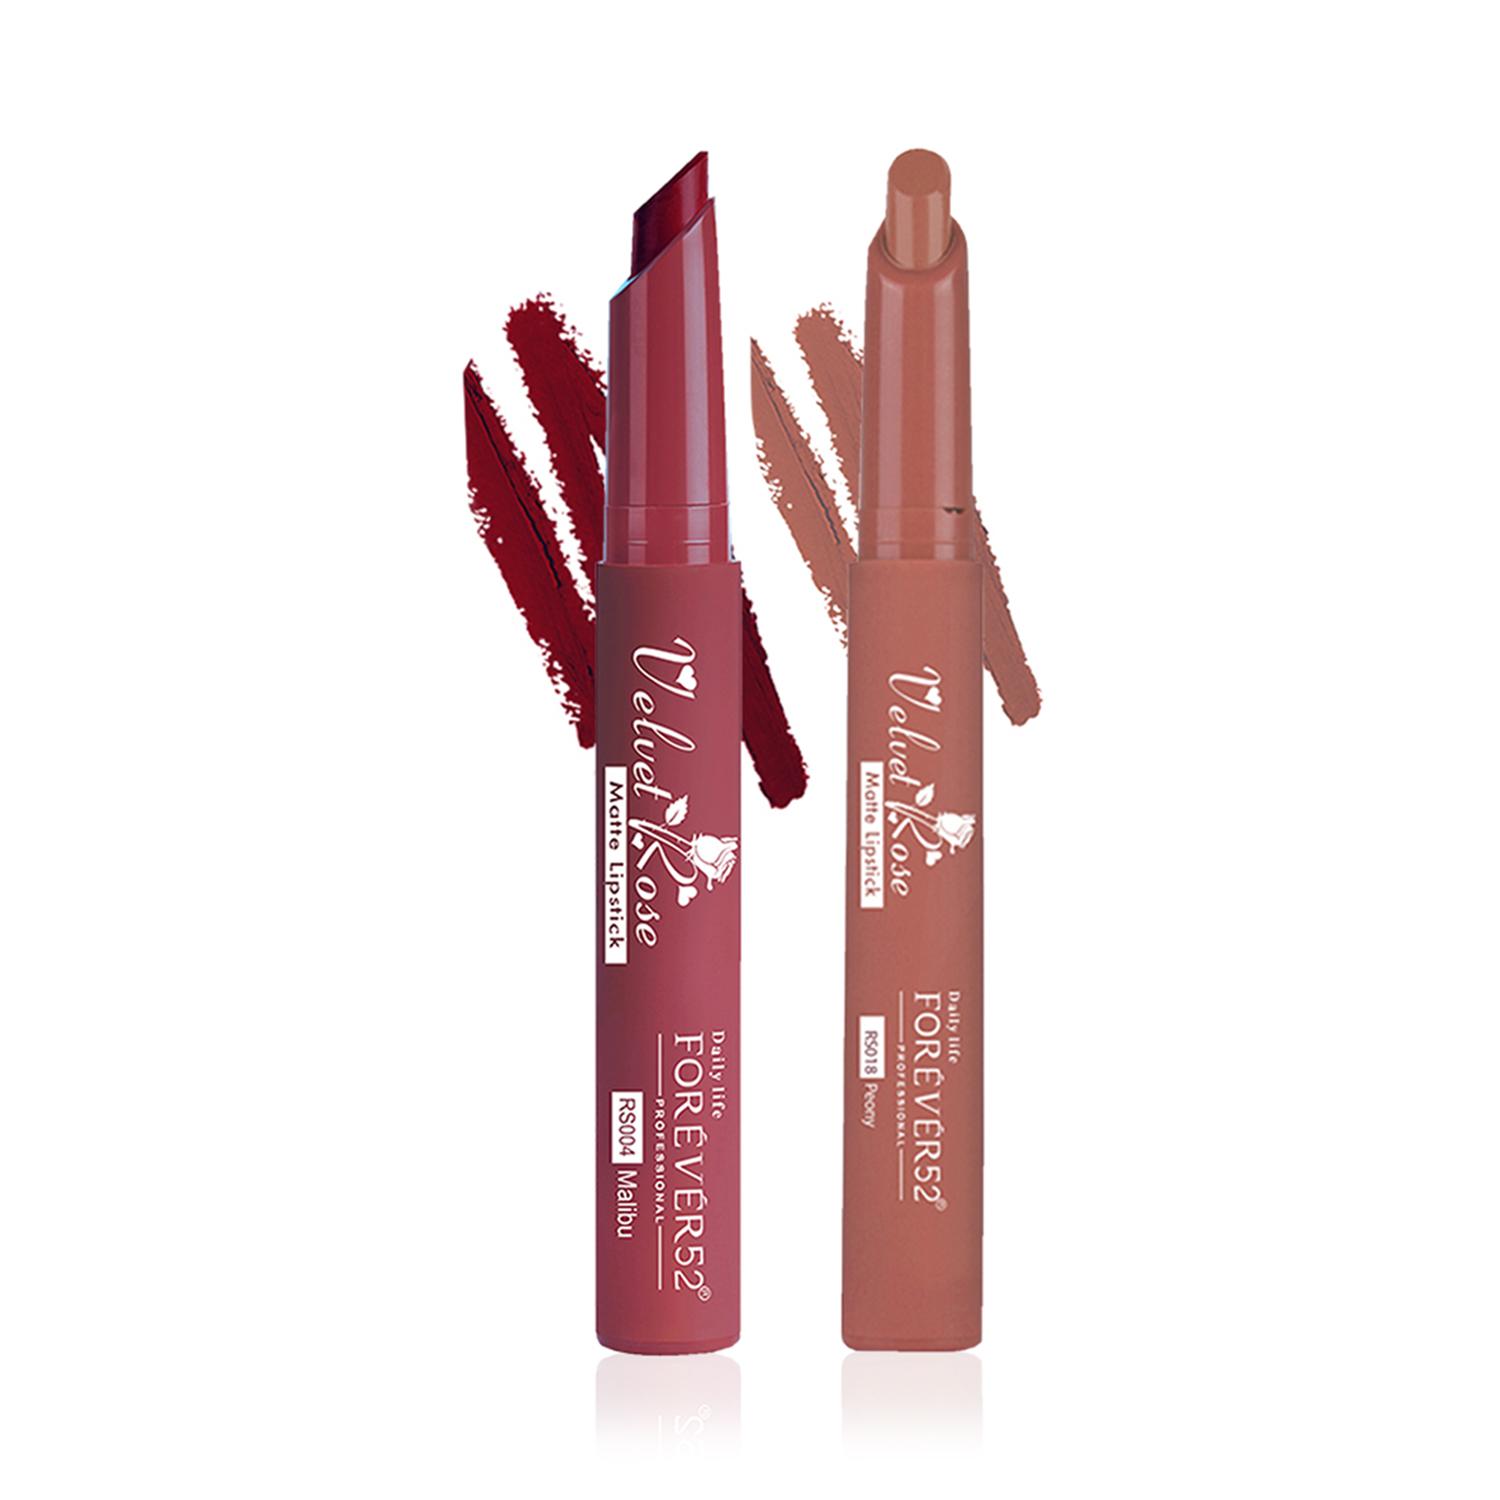 Daily Life Forever52 Velvet Rose Matte Lipstick Set of 2 Crayons Combo(Malibu,Peony)